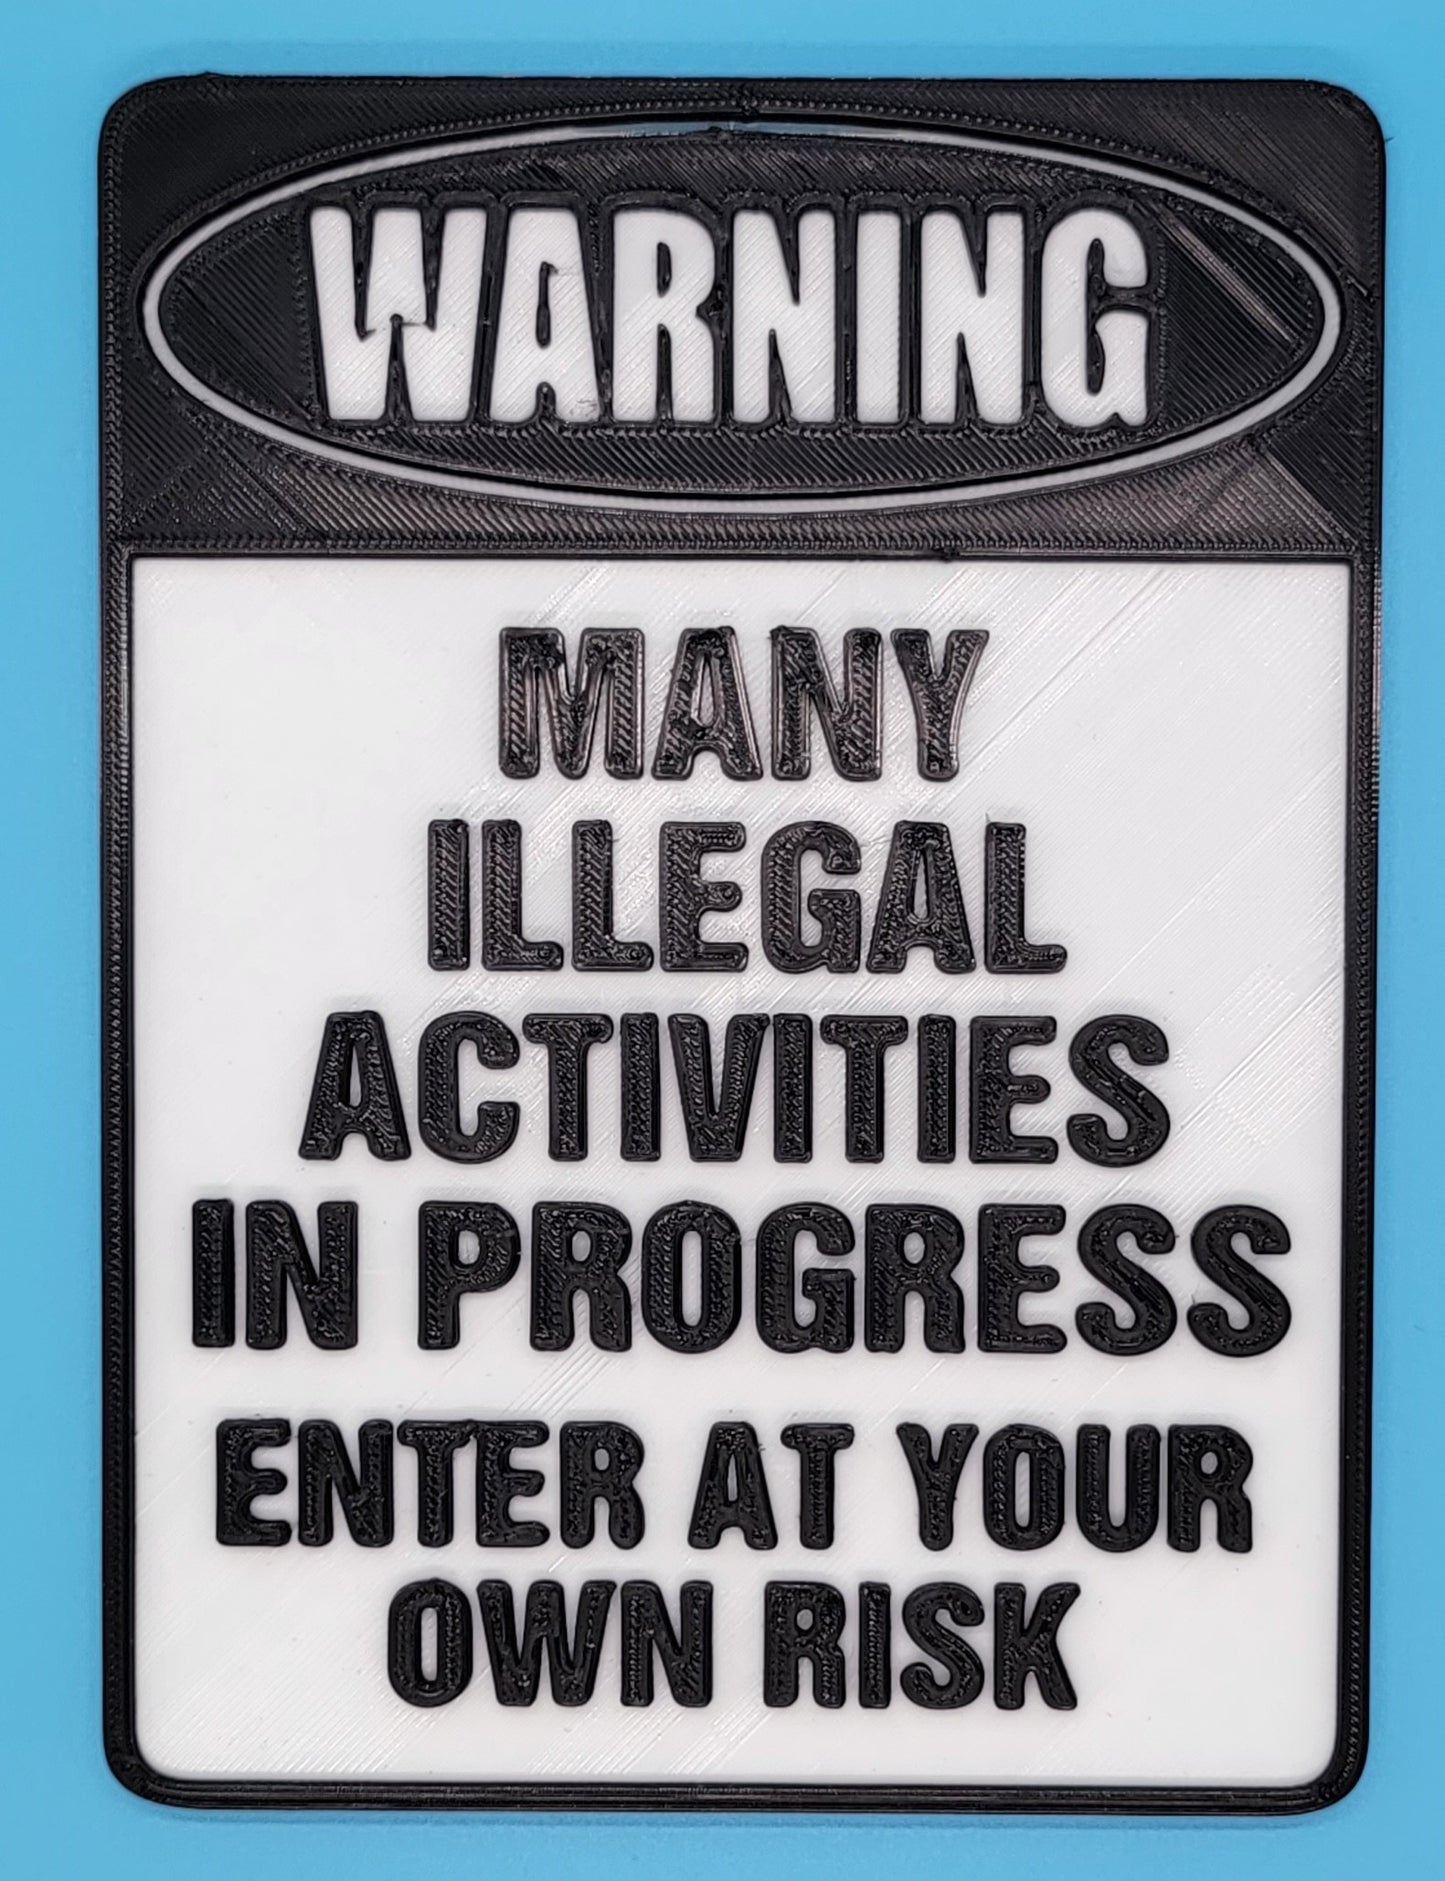 Illegal Activities IN Progress! - 3D printed sign